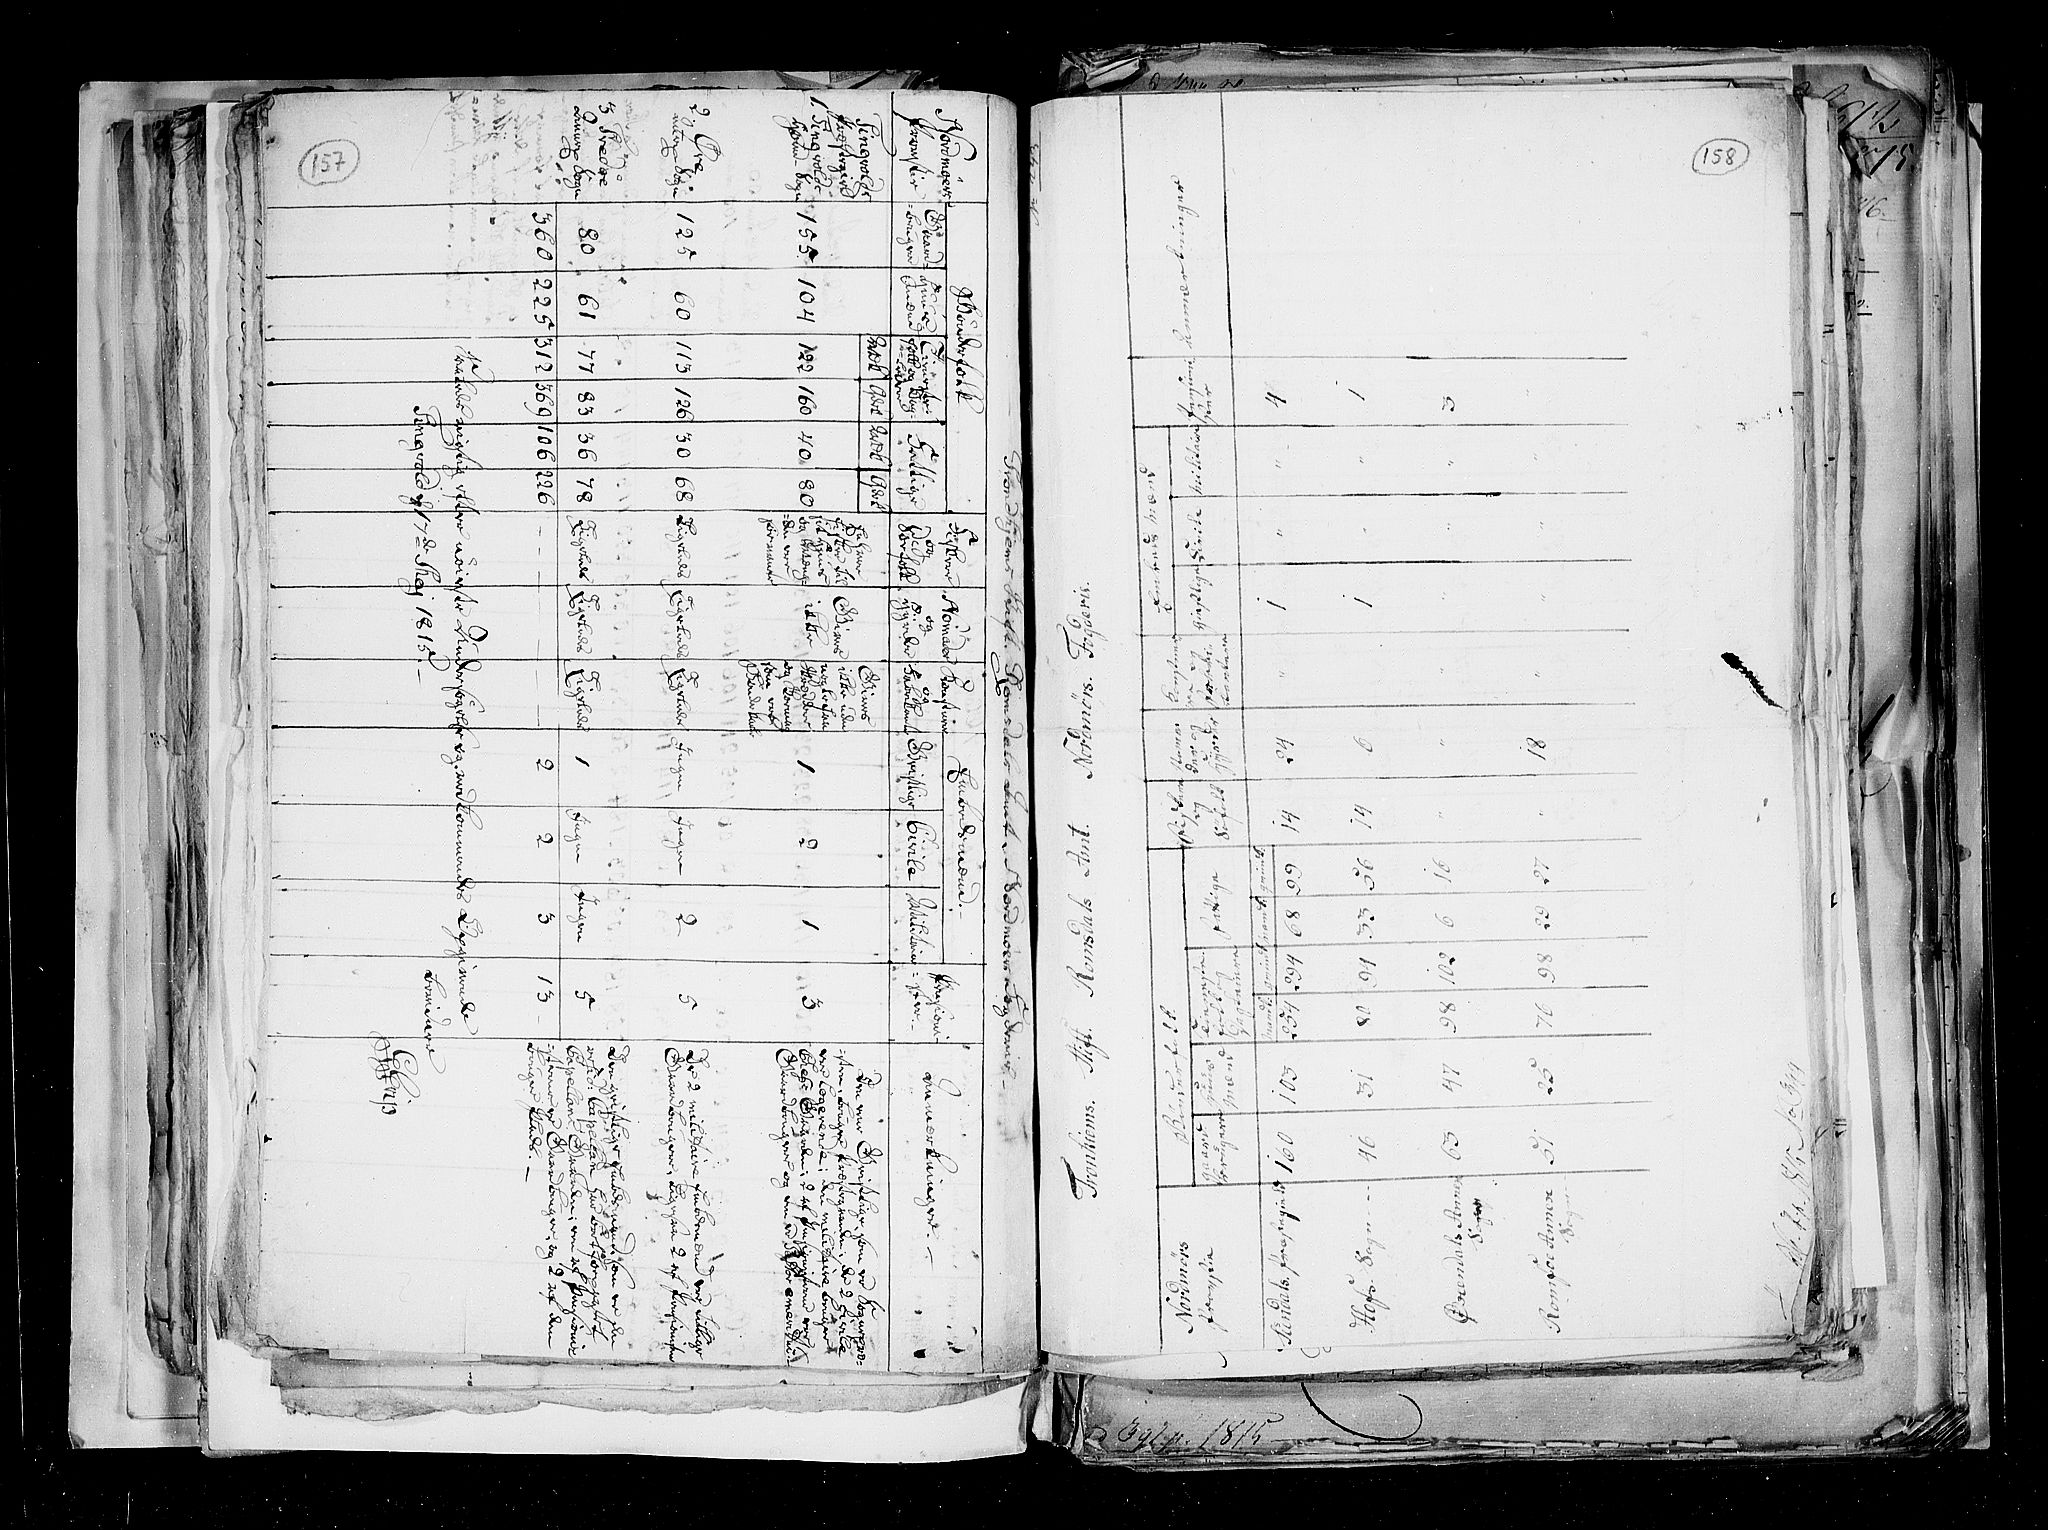 RA, Census 1815, vol. 2: Bergen stift and Trondheim stift, 1815, p. 100